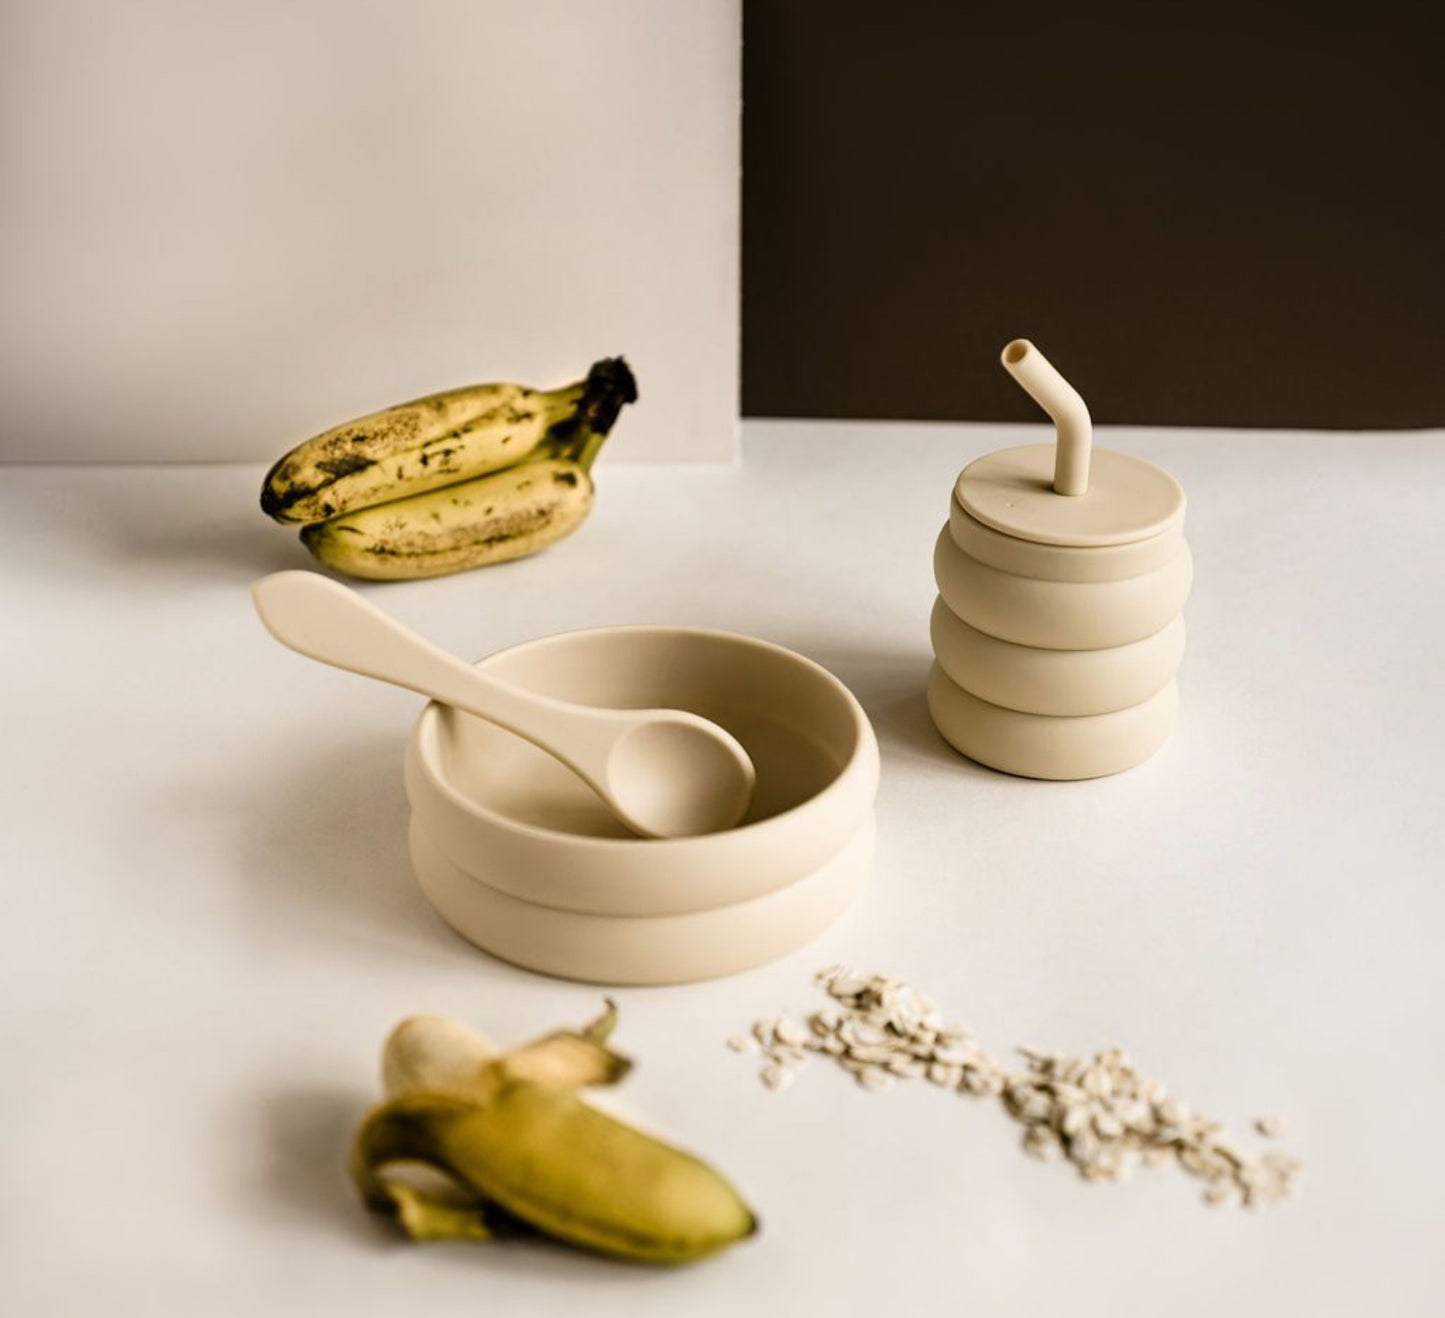 The Breakfast Set - Oatmeal Banana